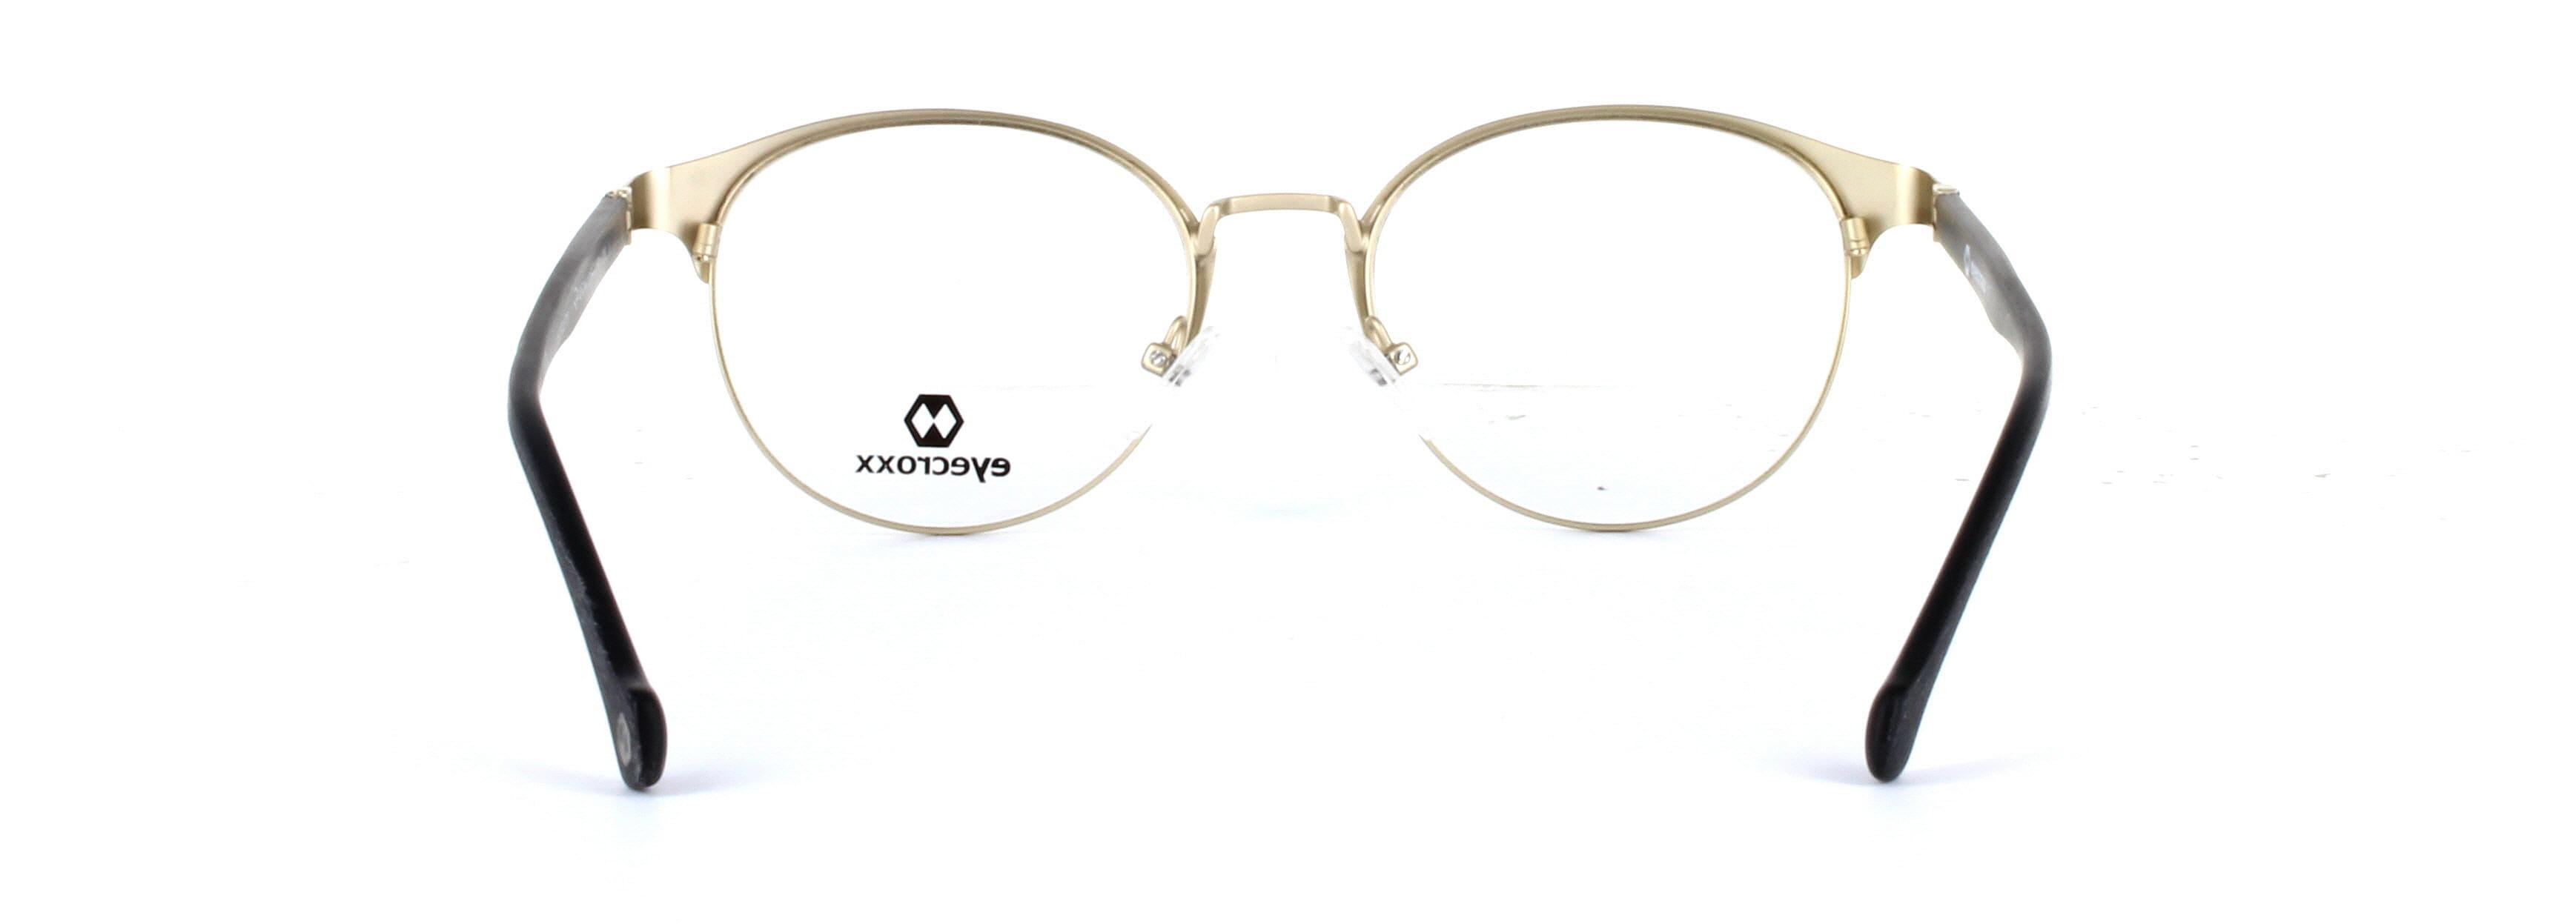 Eyecroxx 543 Black Full Rim Round Metal Glasses - Image View 3